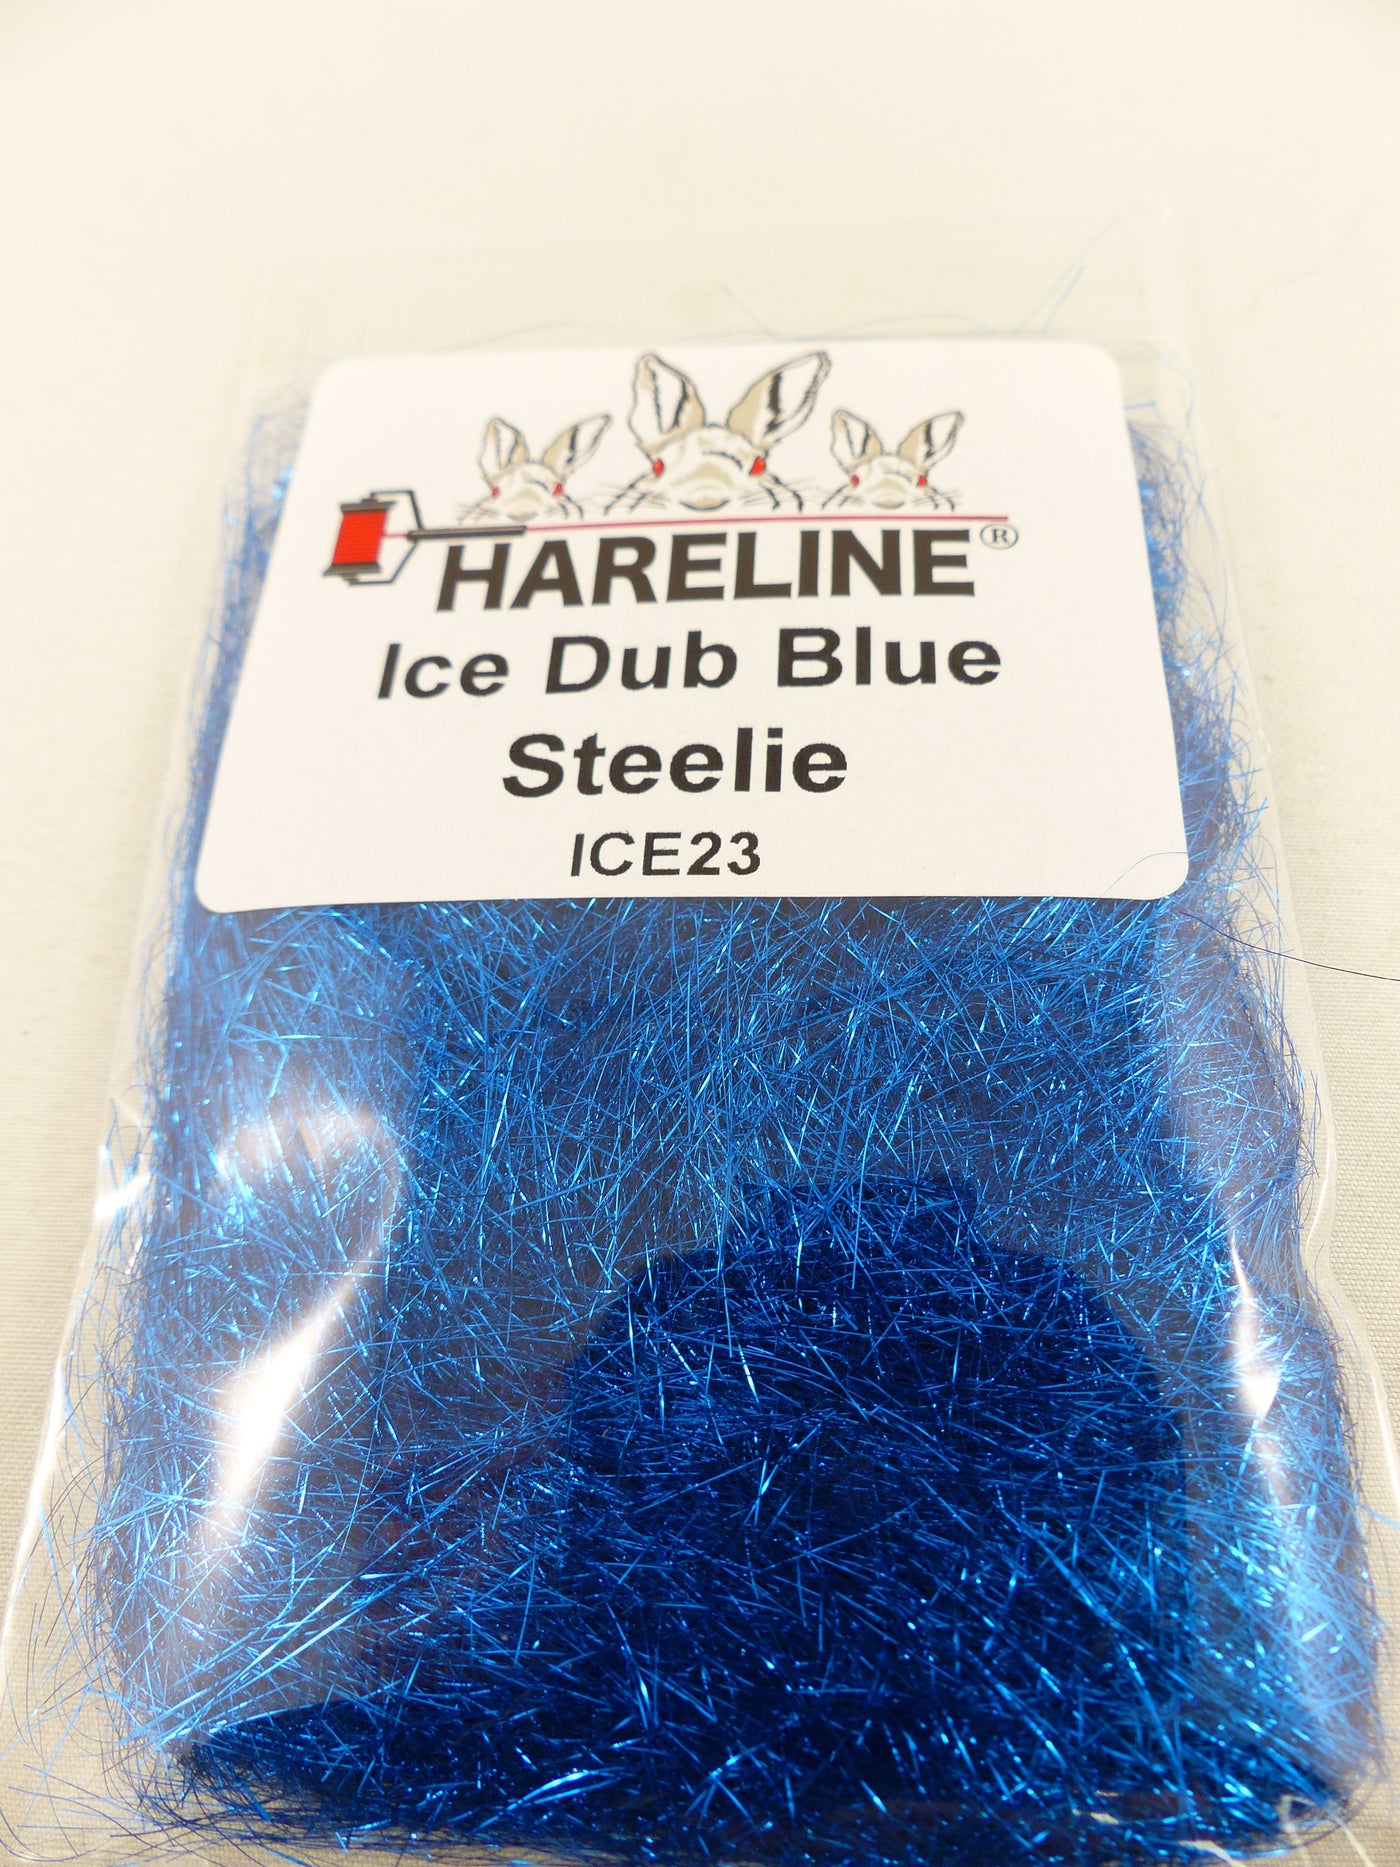 ICE DUBBING HARELINE